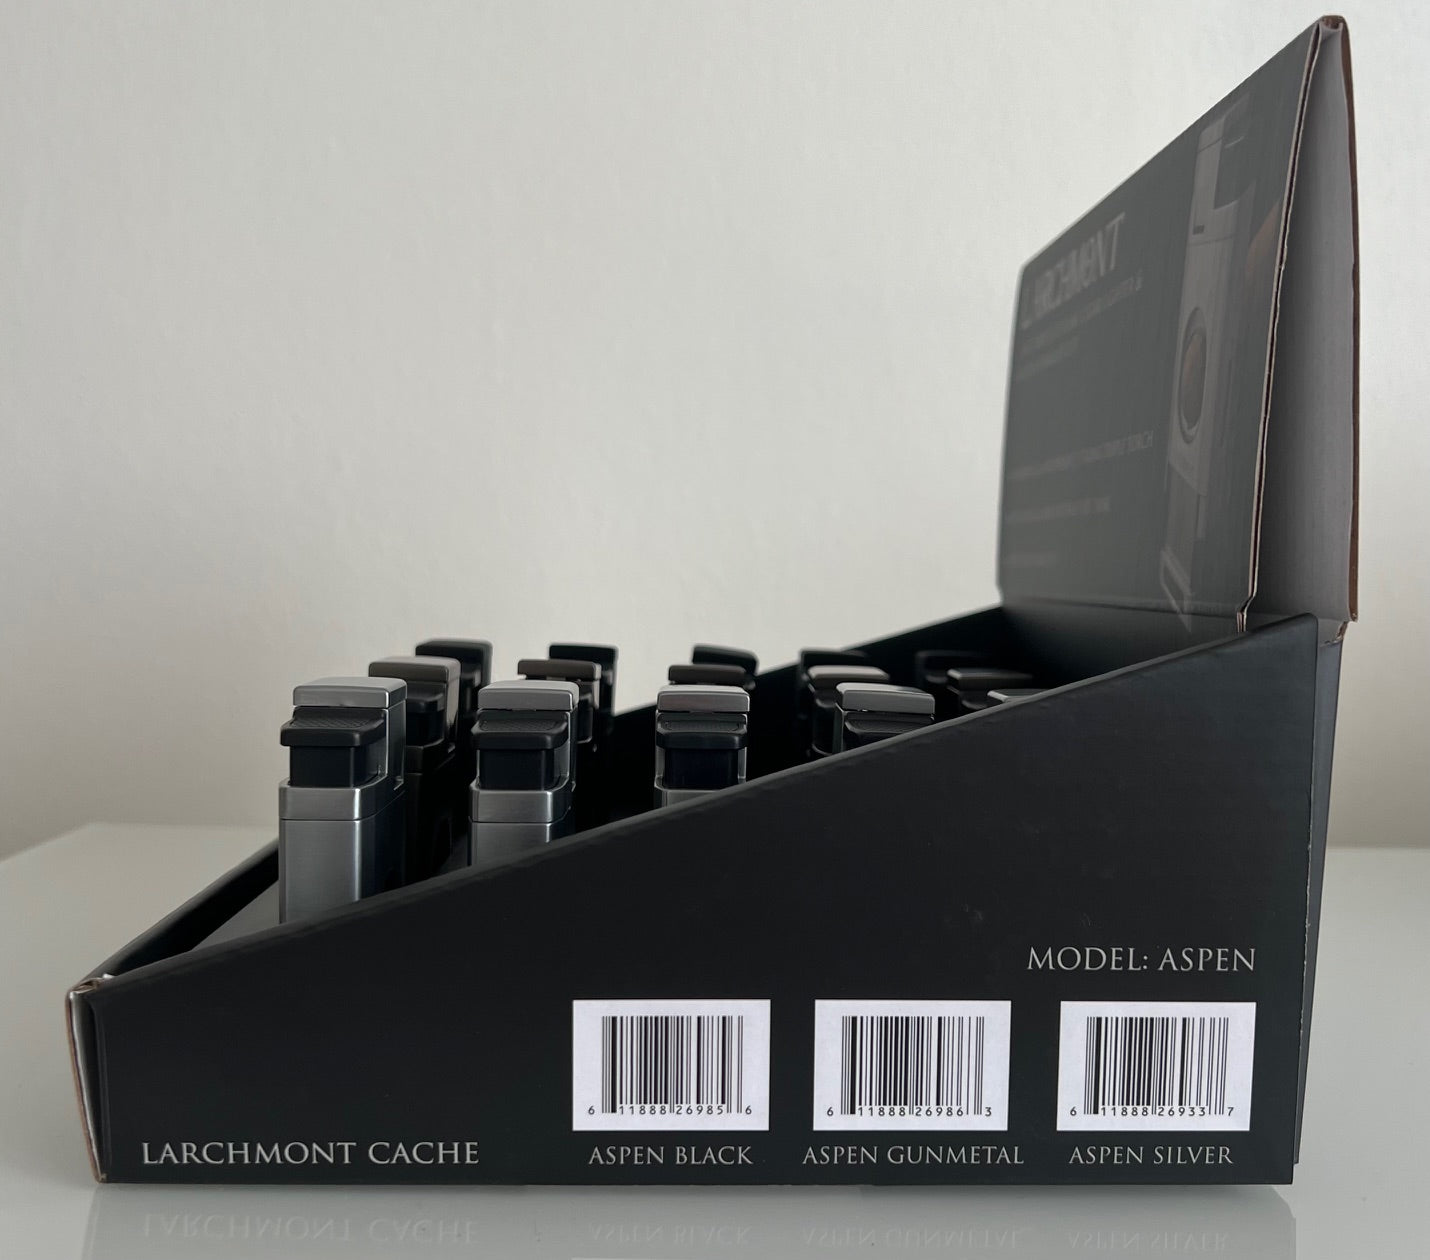 Display Counter  Larchmont Aspen 2-in-1 Aspen Triple Torch butane Lighter and Cigar Cutter Built-In 15 PCS (5 Black, 5 Gun Metal, 5 Sliver)